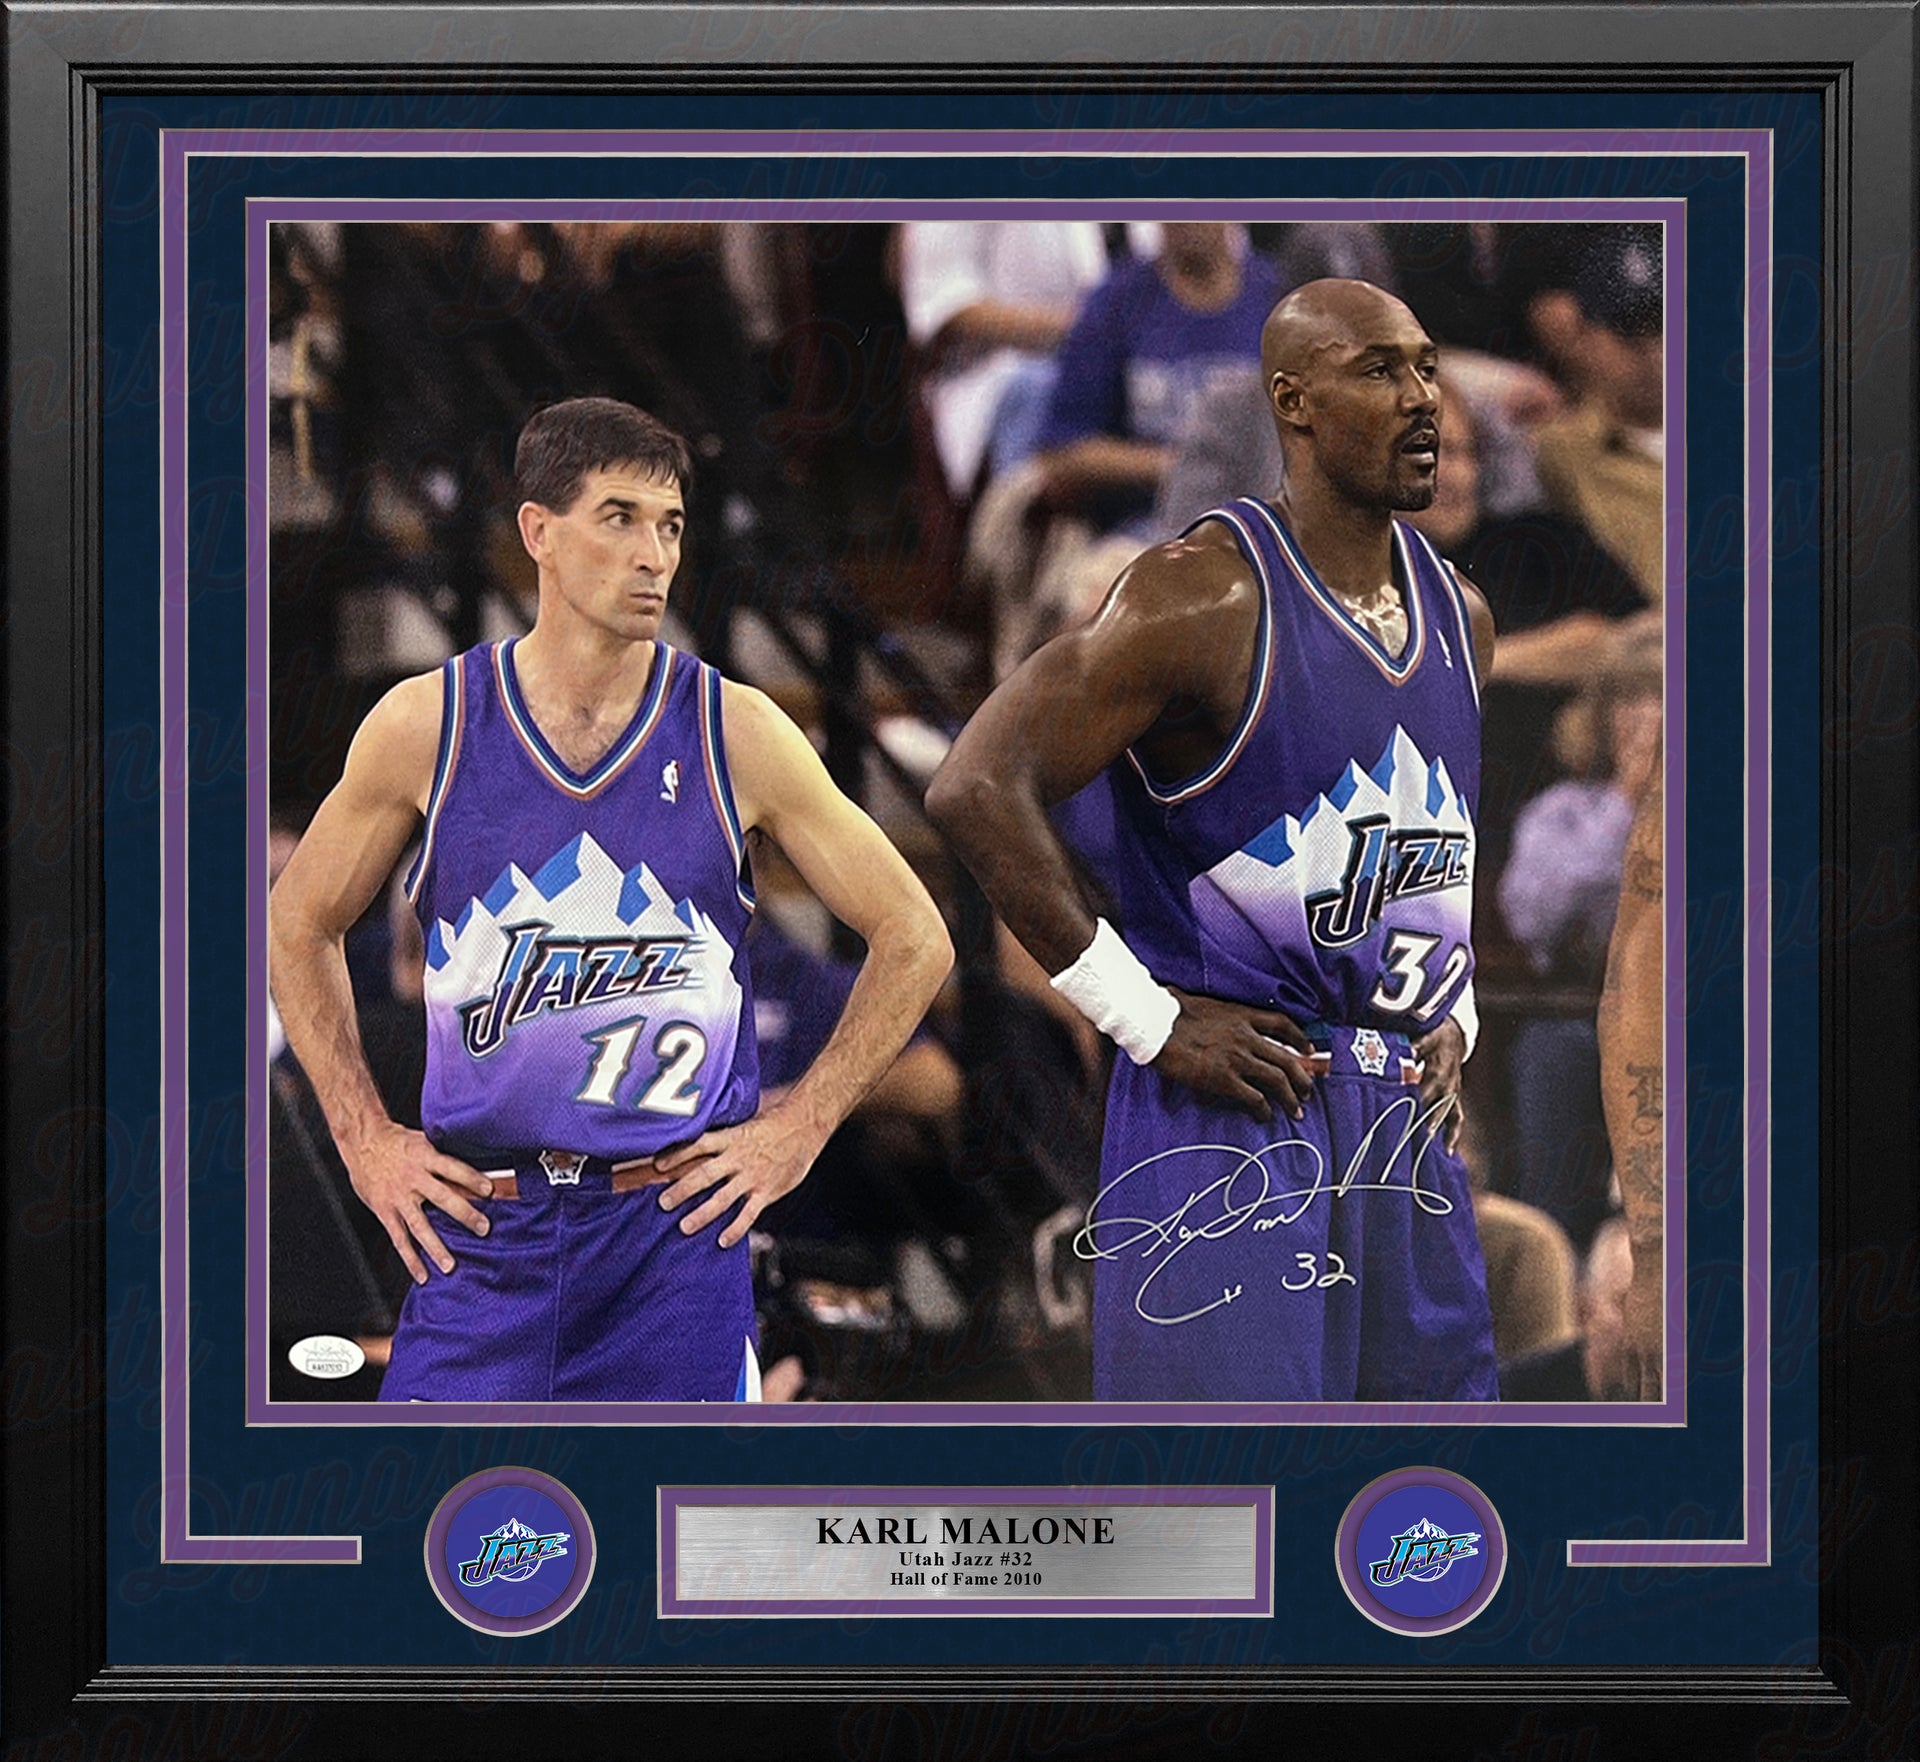 Karl Malone with Stockton Utah Jazz Autographed 16" x 20" Framed Basketball Photo - Dynasty Sports & Framing 